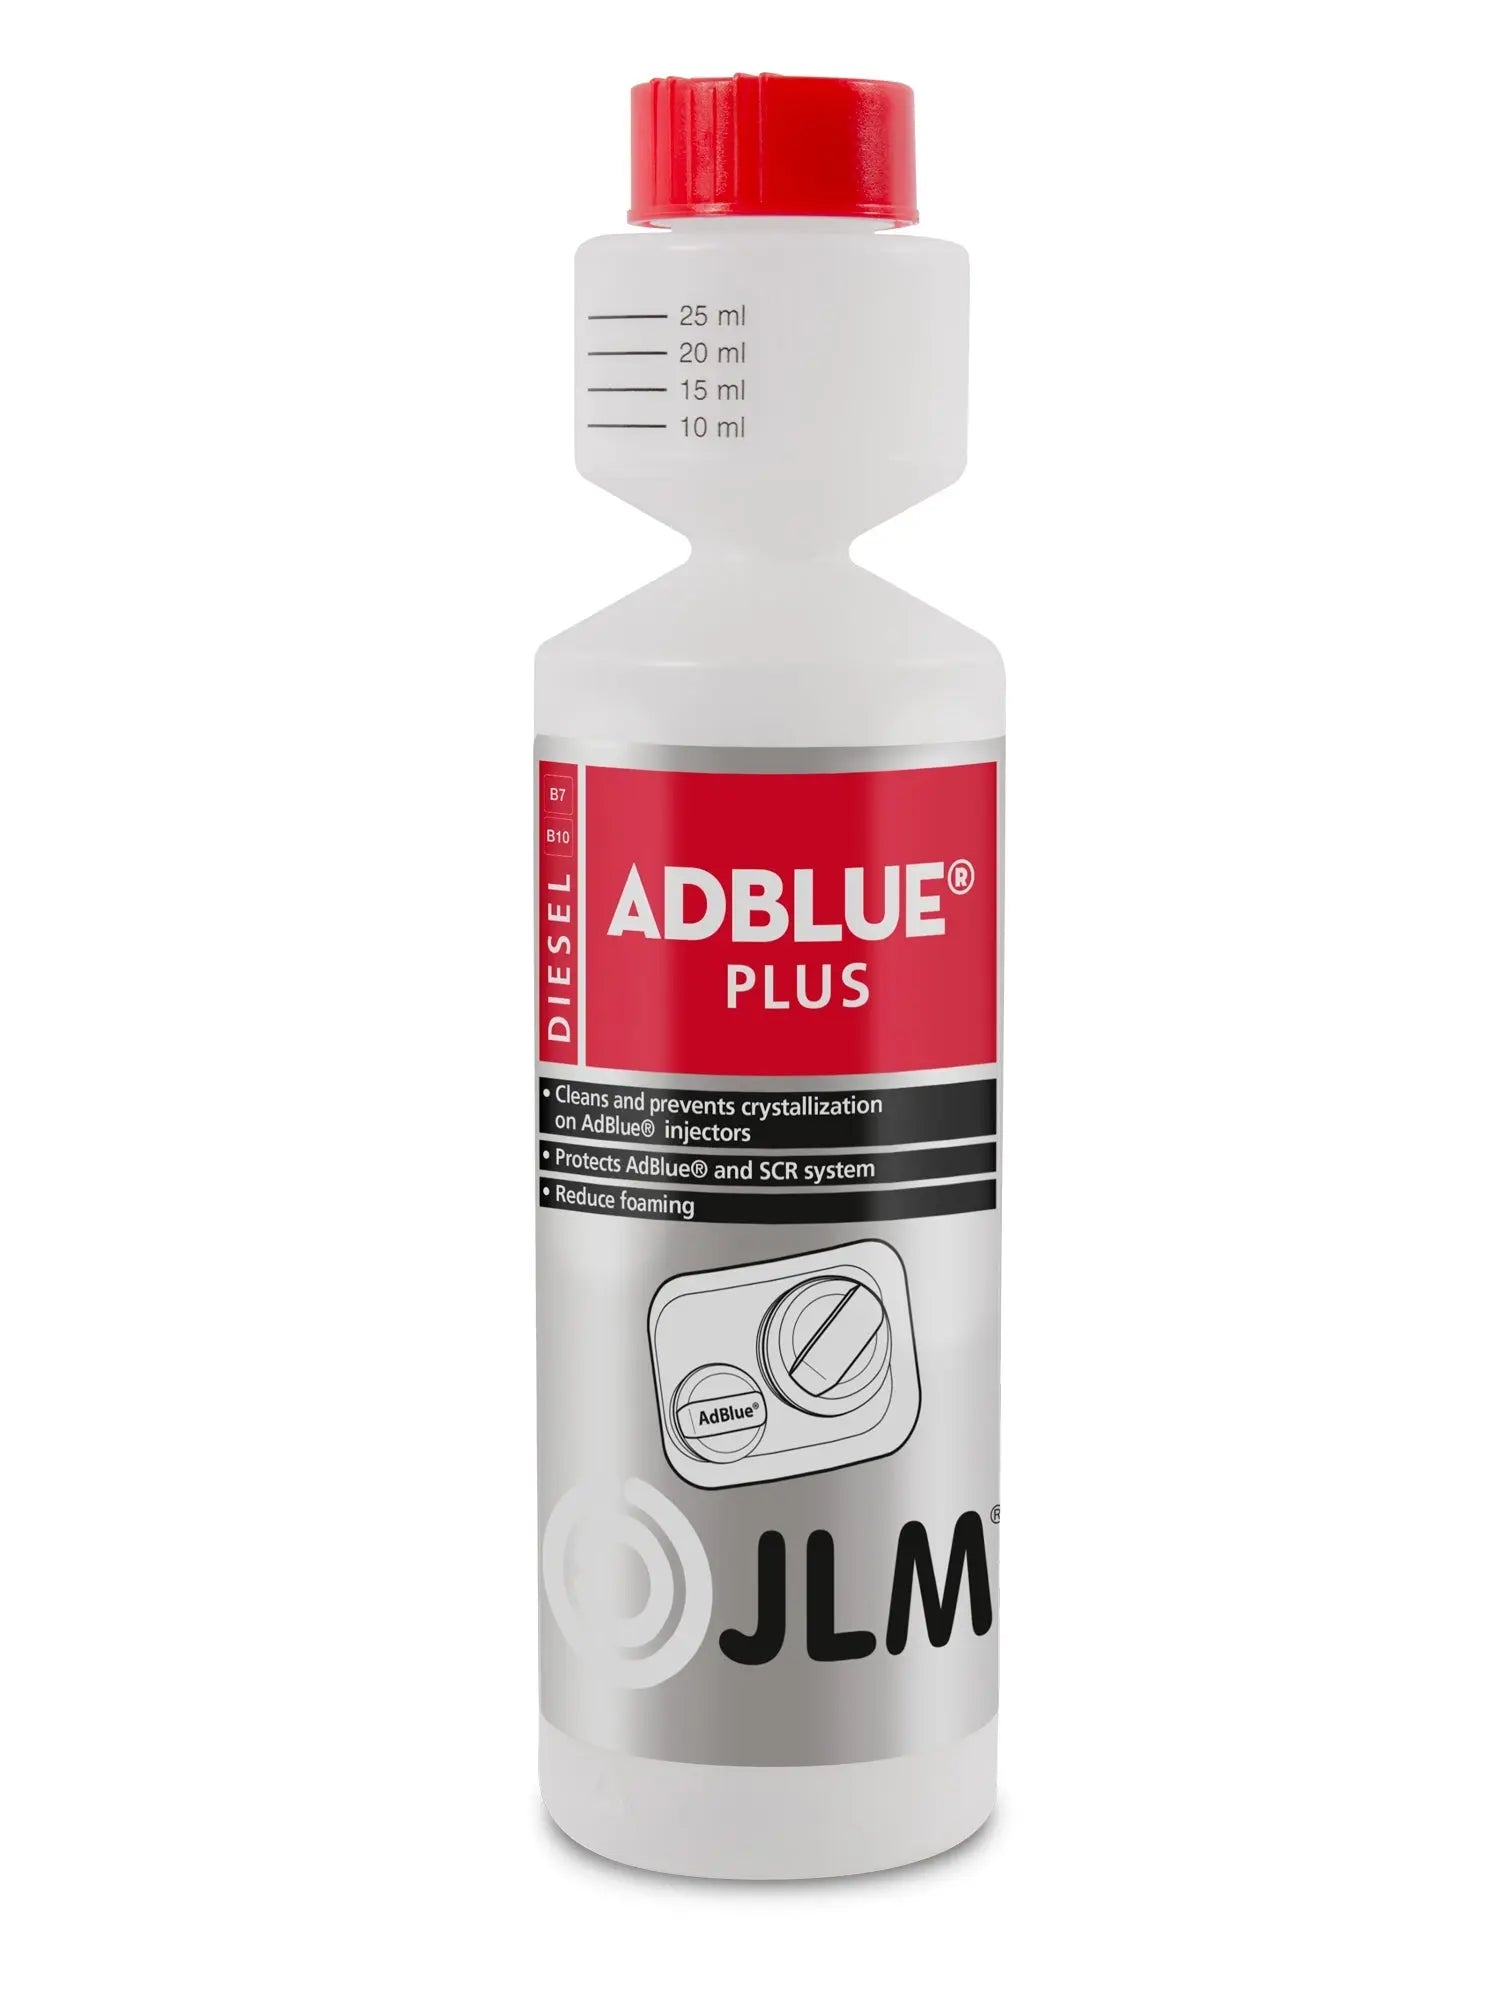 AdBlue® Plus 250ml 1st. JLM - Samsuns Group